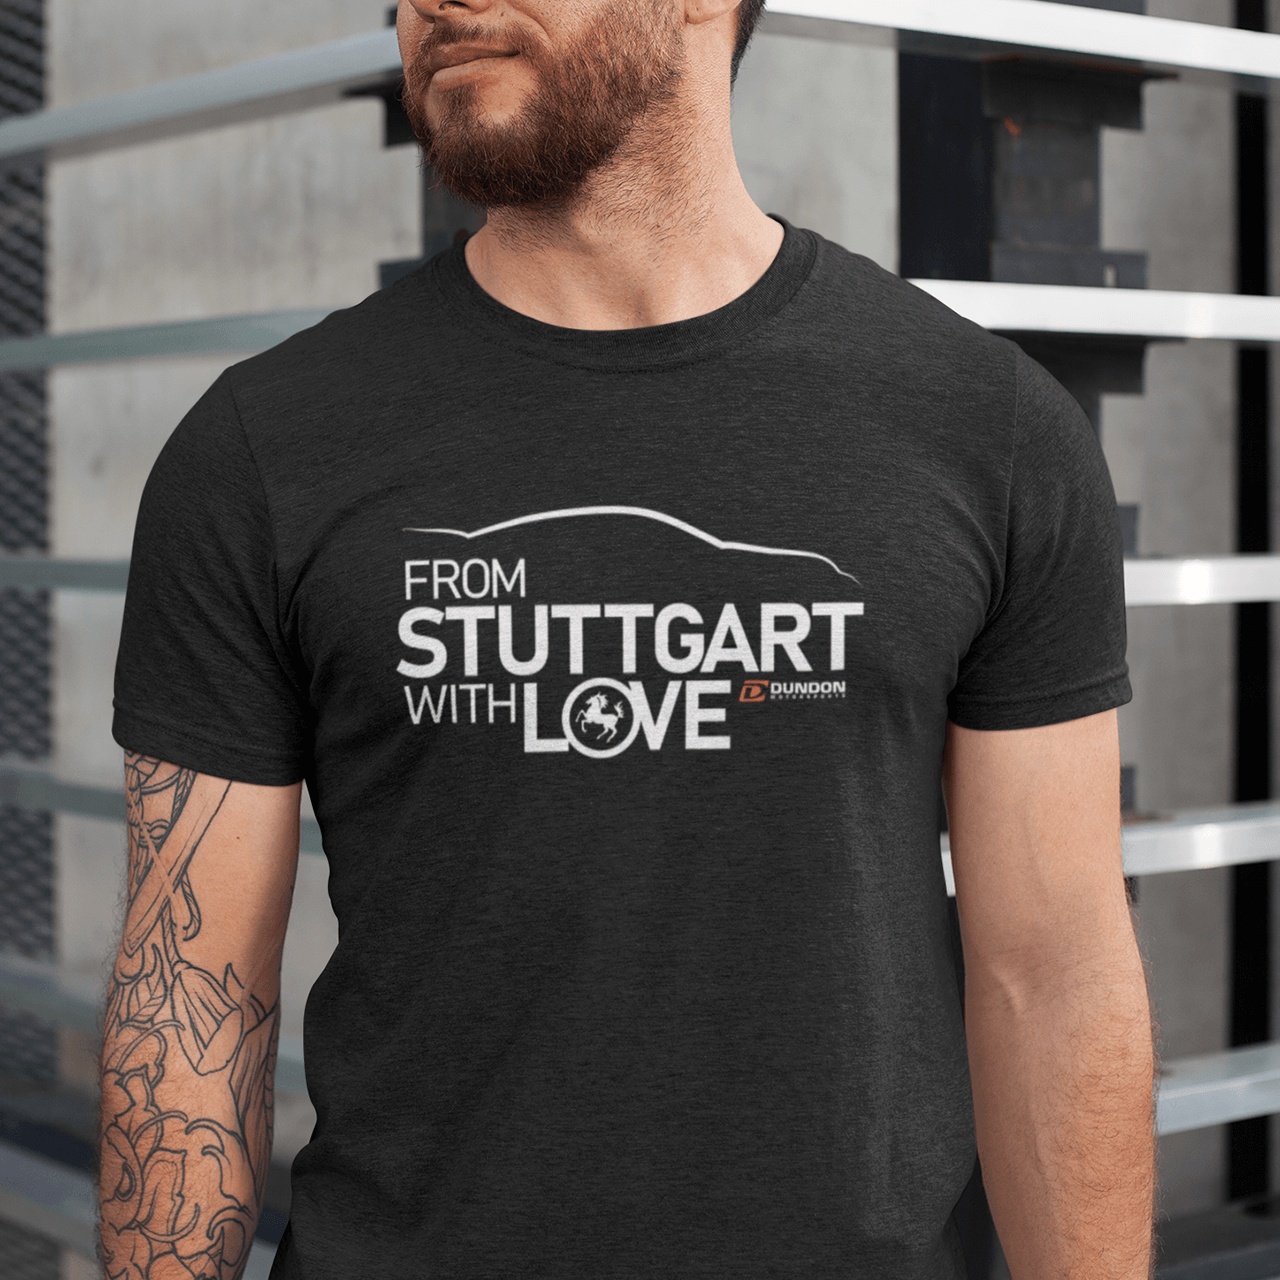 From Stuttgart with Love T-shirt - Dundon Motorsports